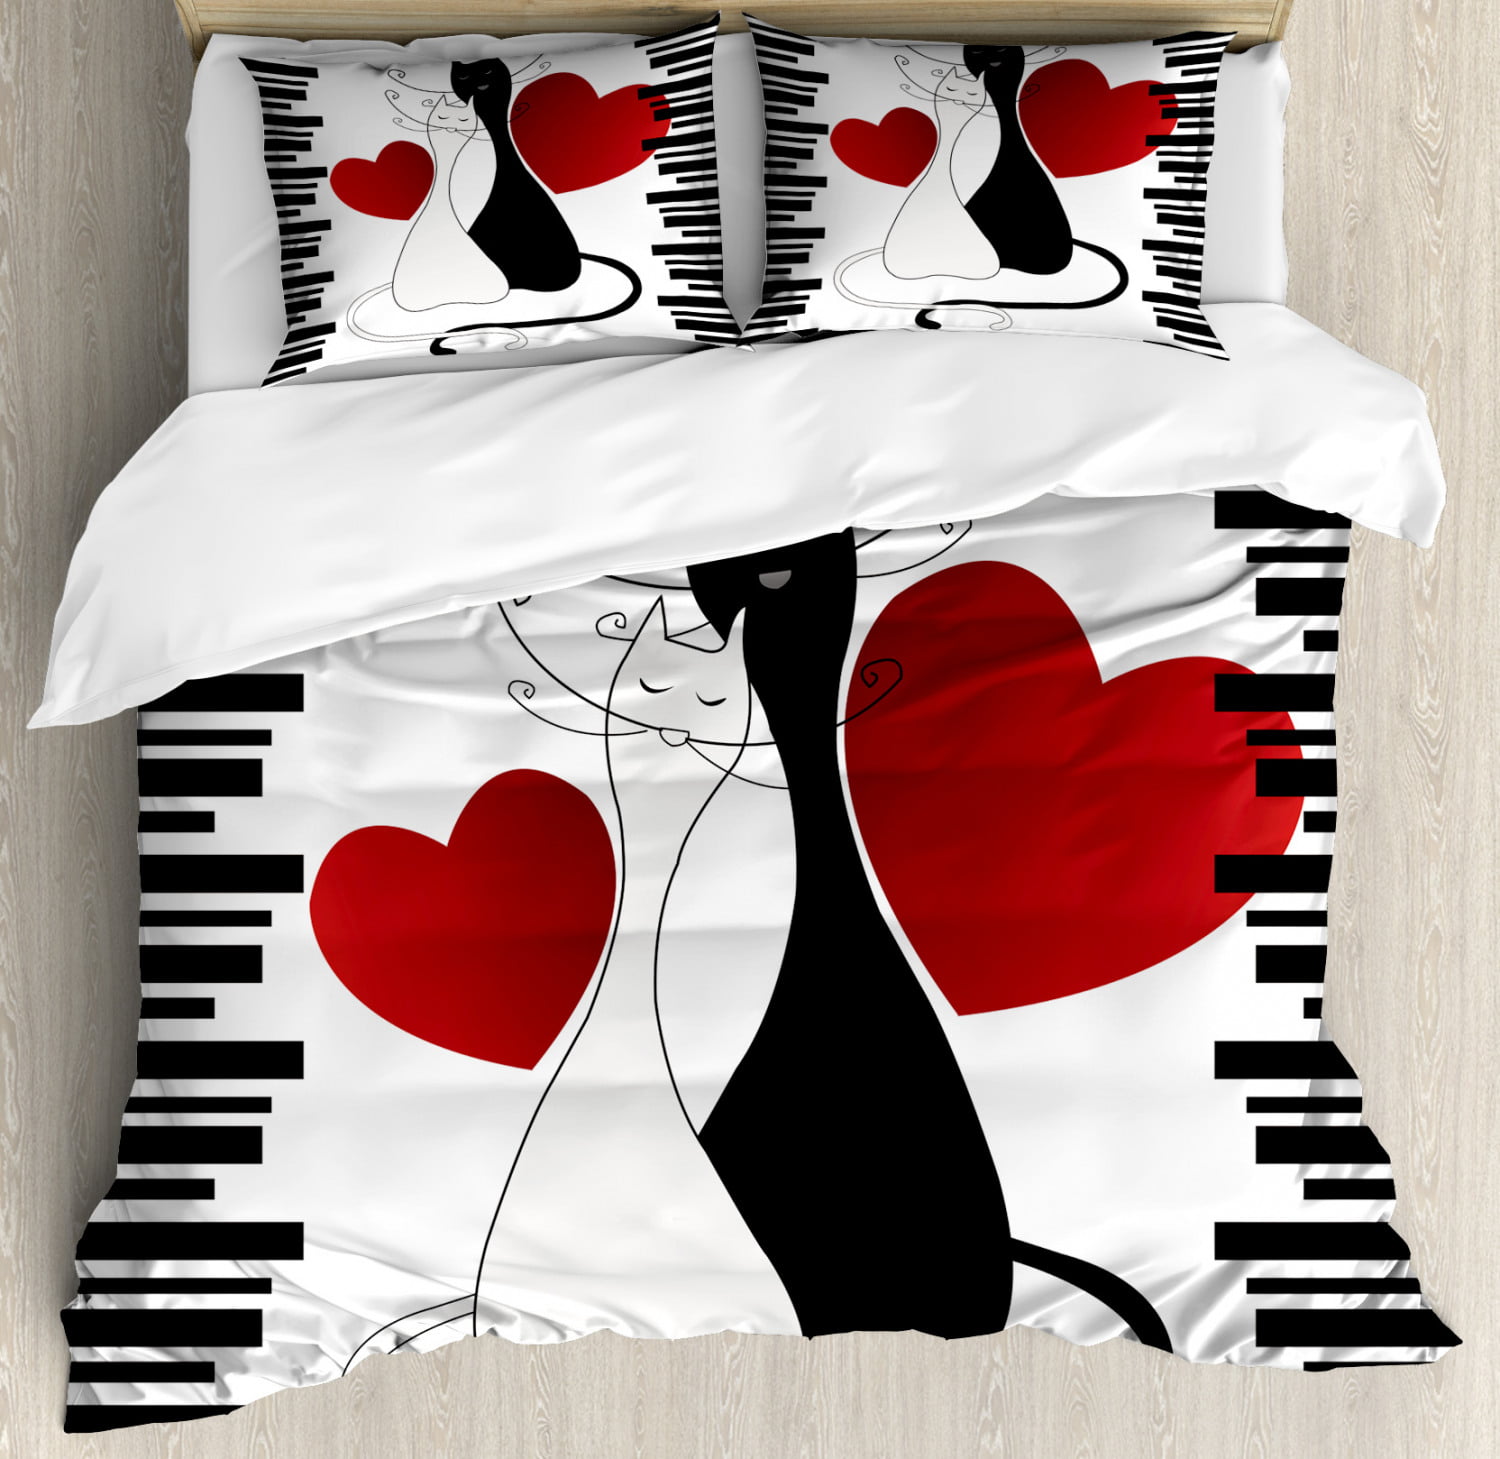 Plain Dyed Single Double King Duvet Set w/ Pillowcase White Cream Red/Black 